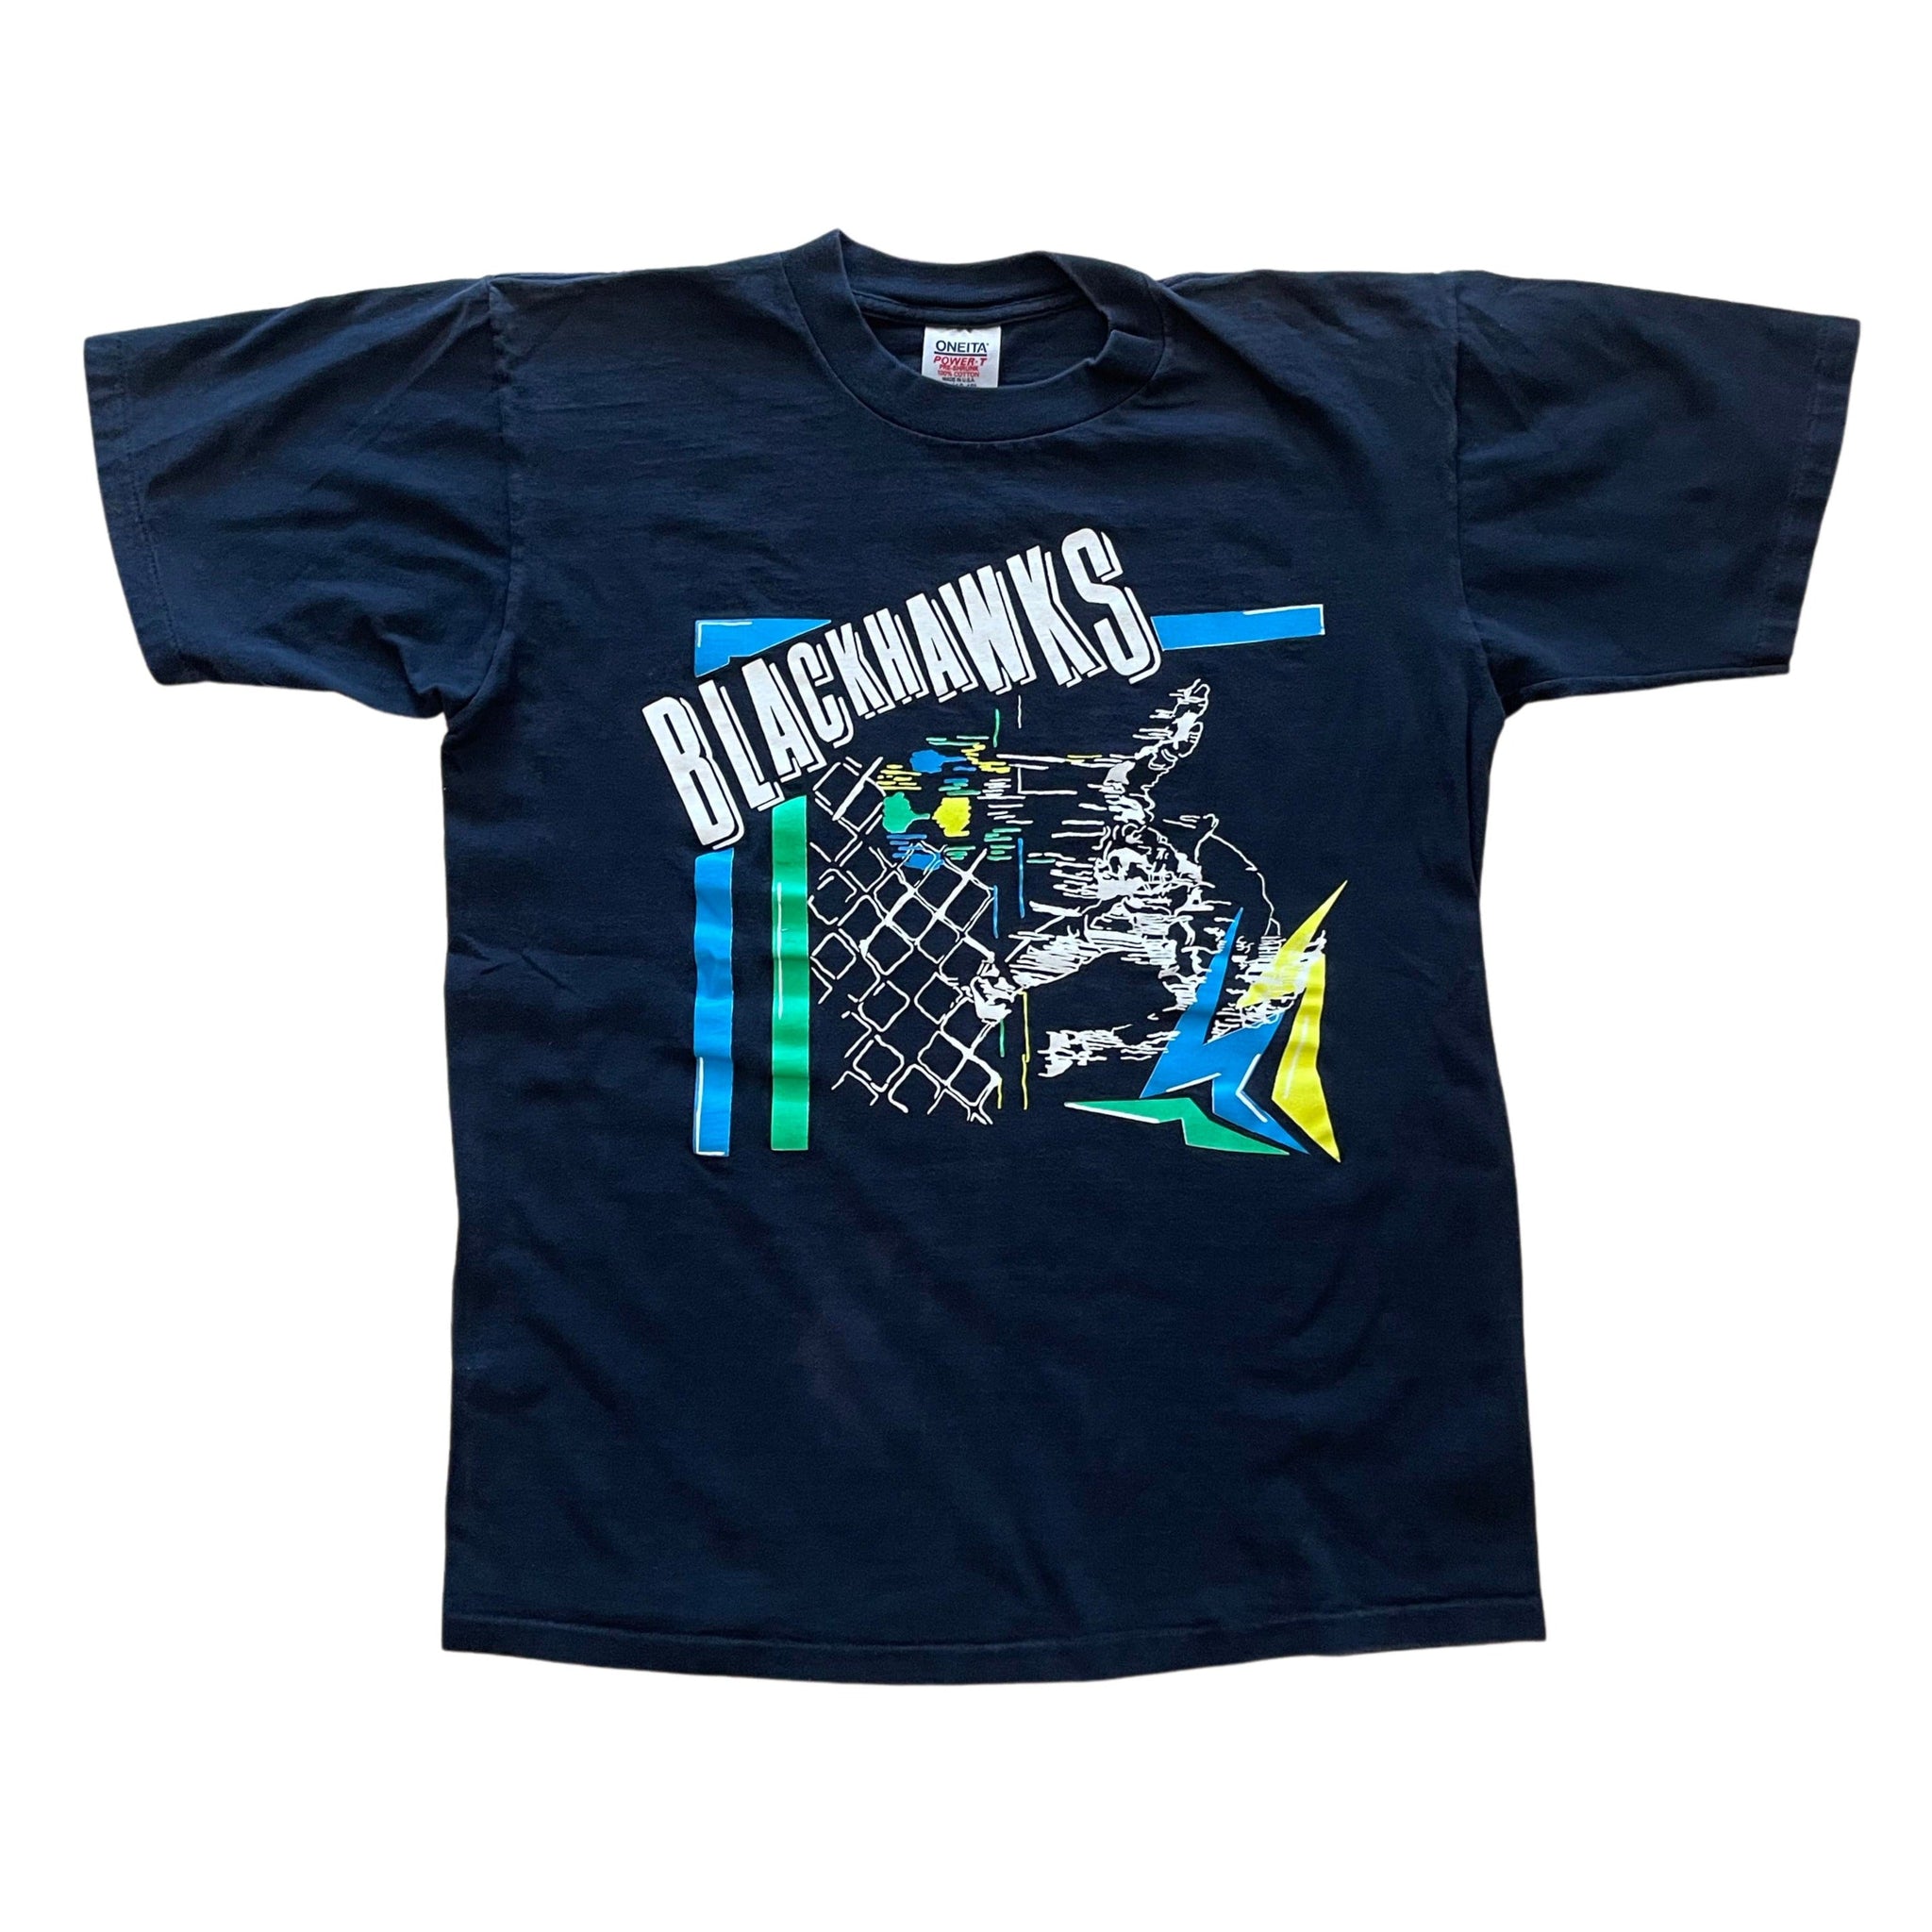 Blackhawks Soccer Graphic T-Shirt - L